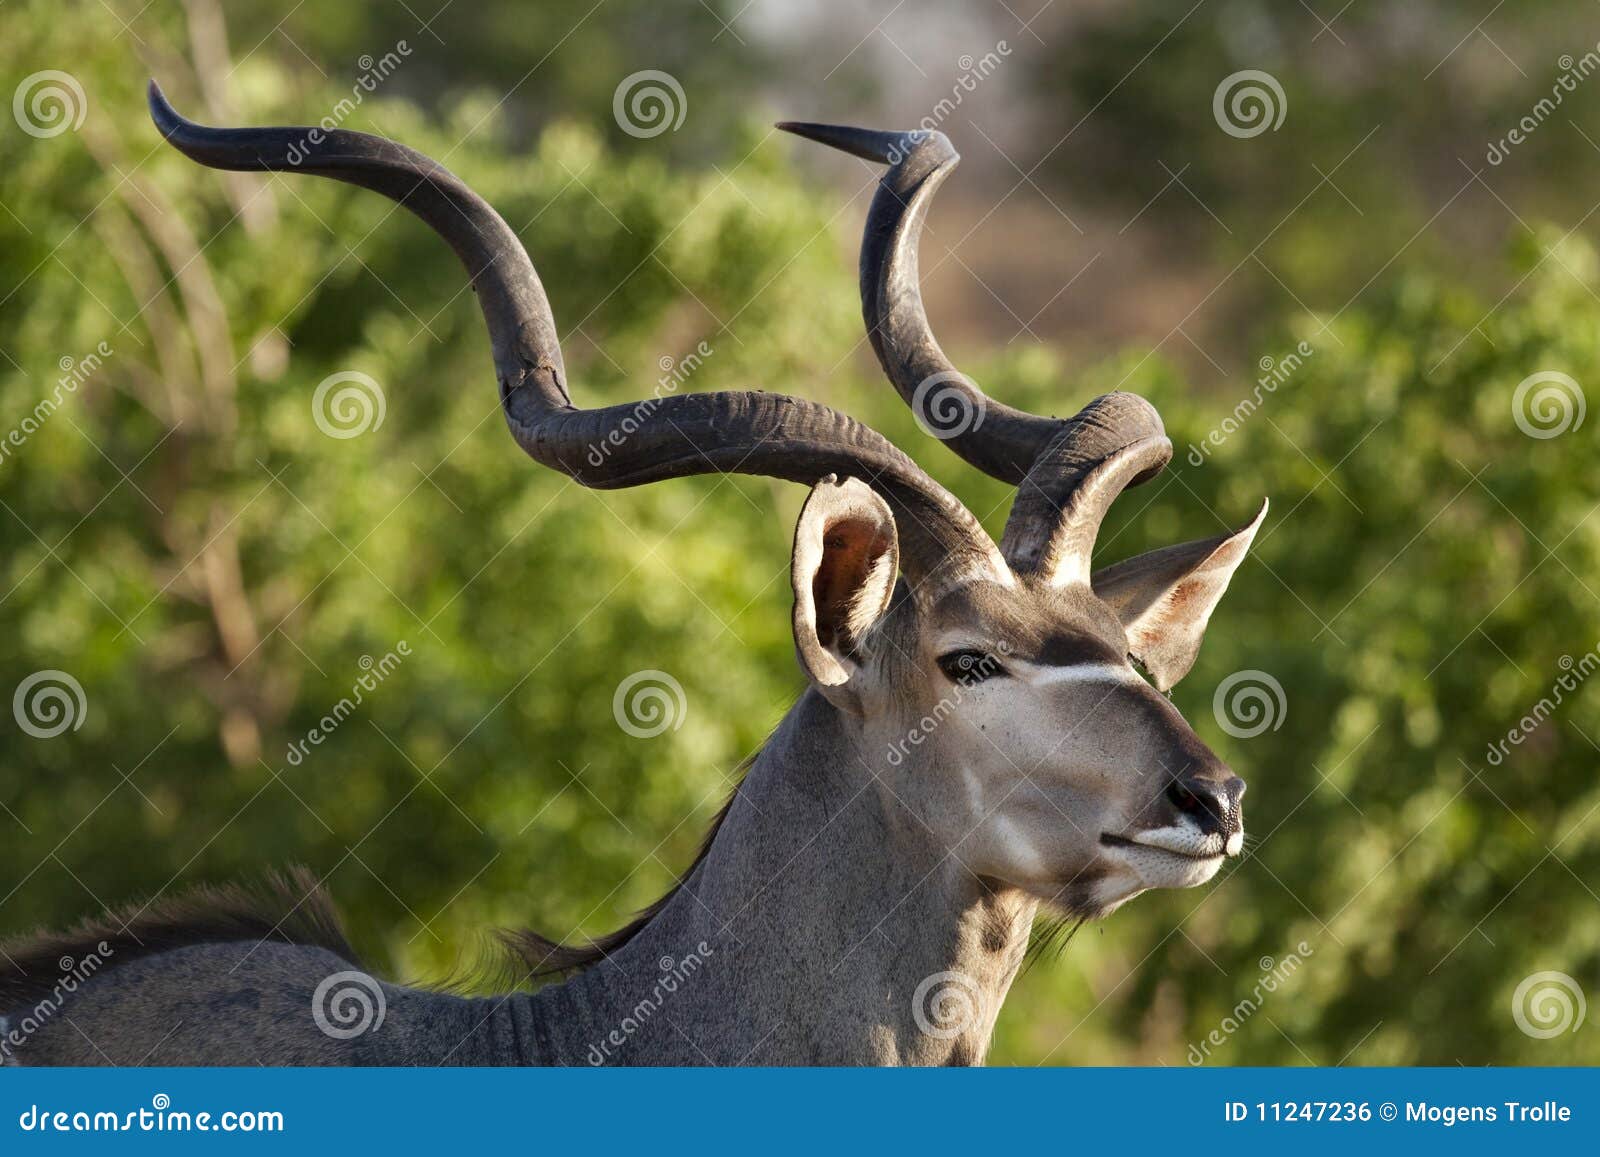 greater kudu close-up, botswana